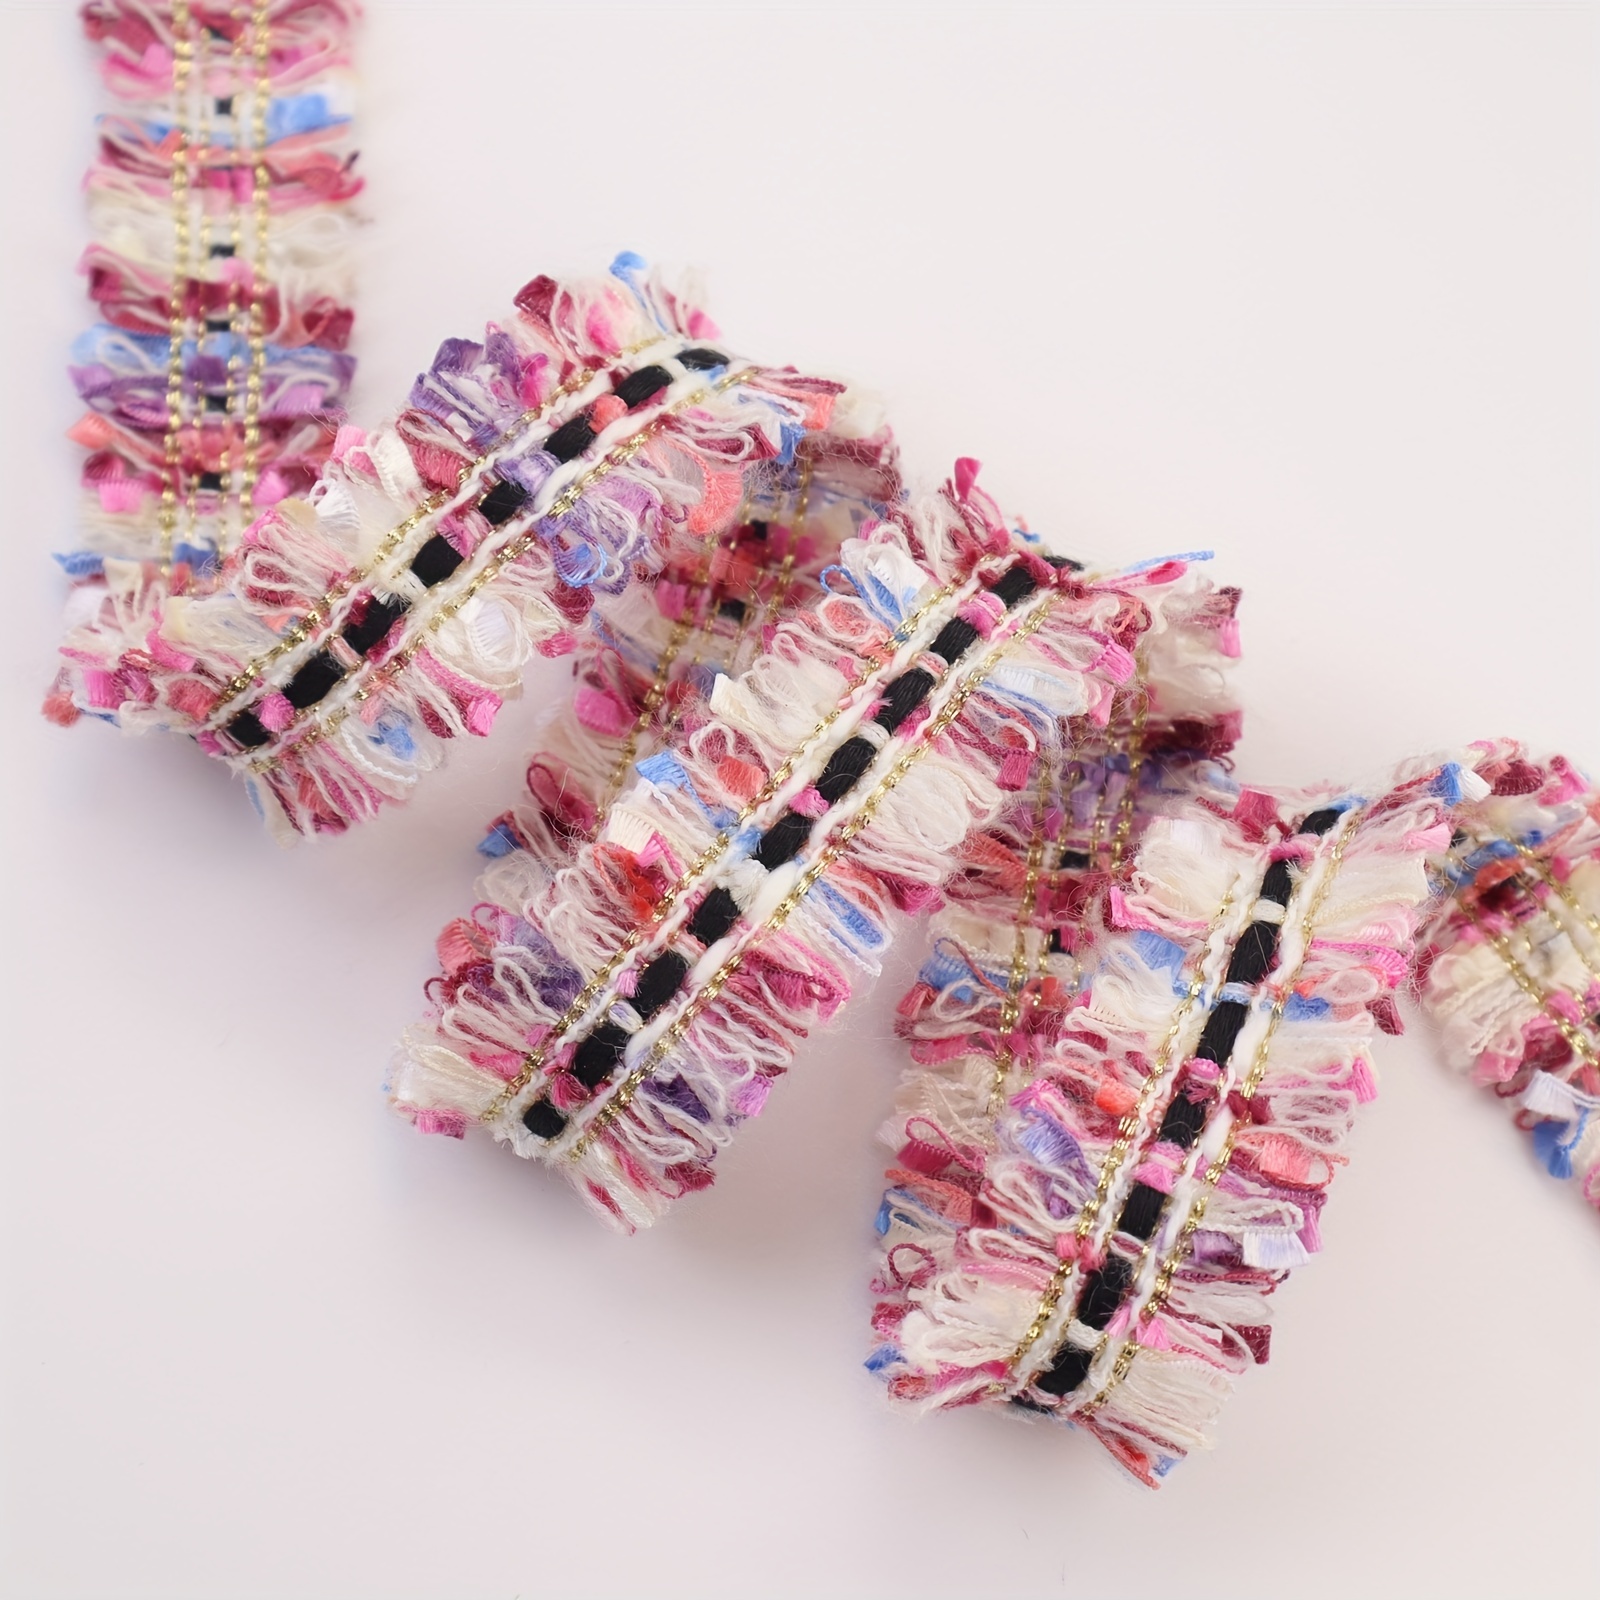 IDONGCAI Beige Cotton Lace Trim Lace Ribbon Fabric Fringe Trim DIY